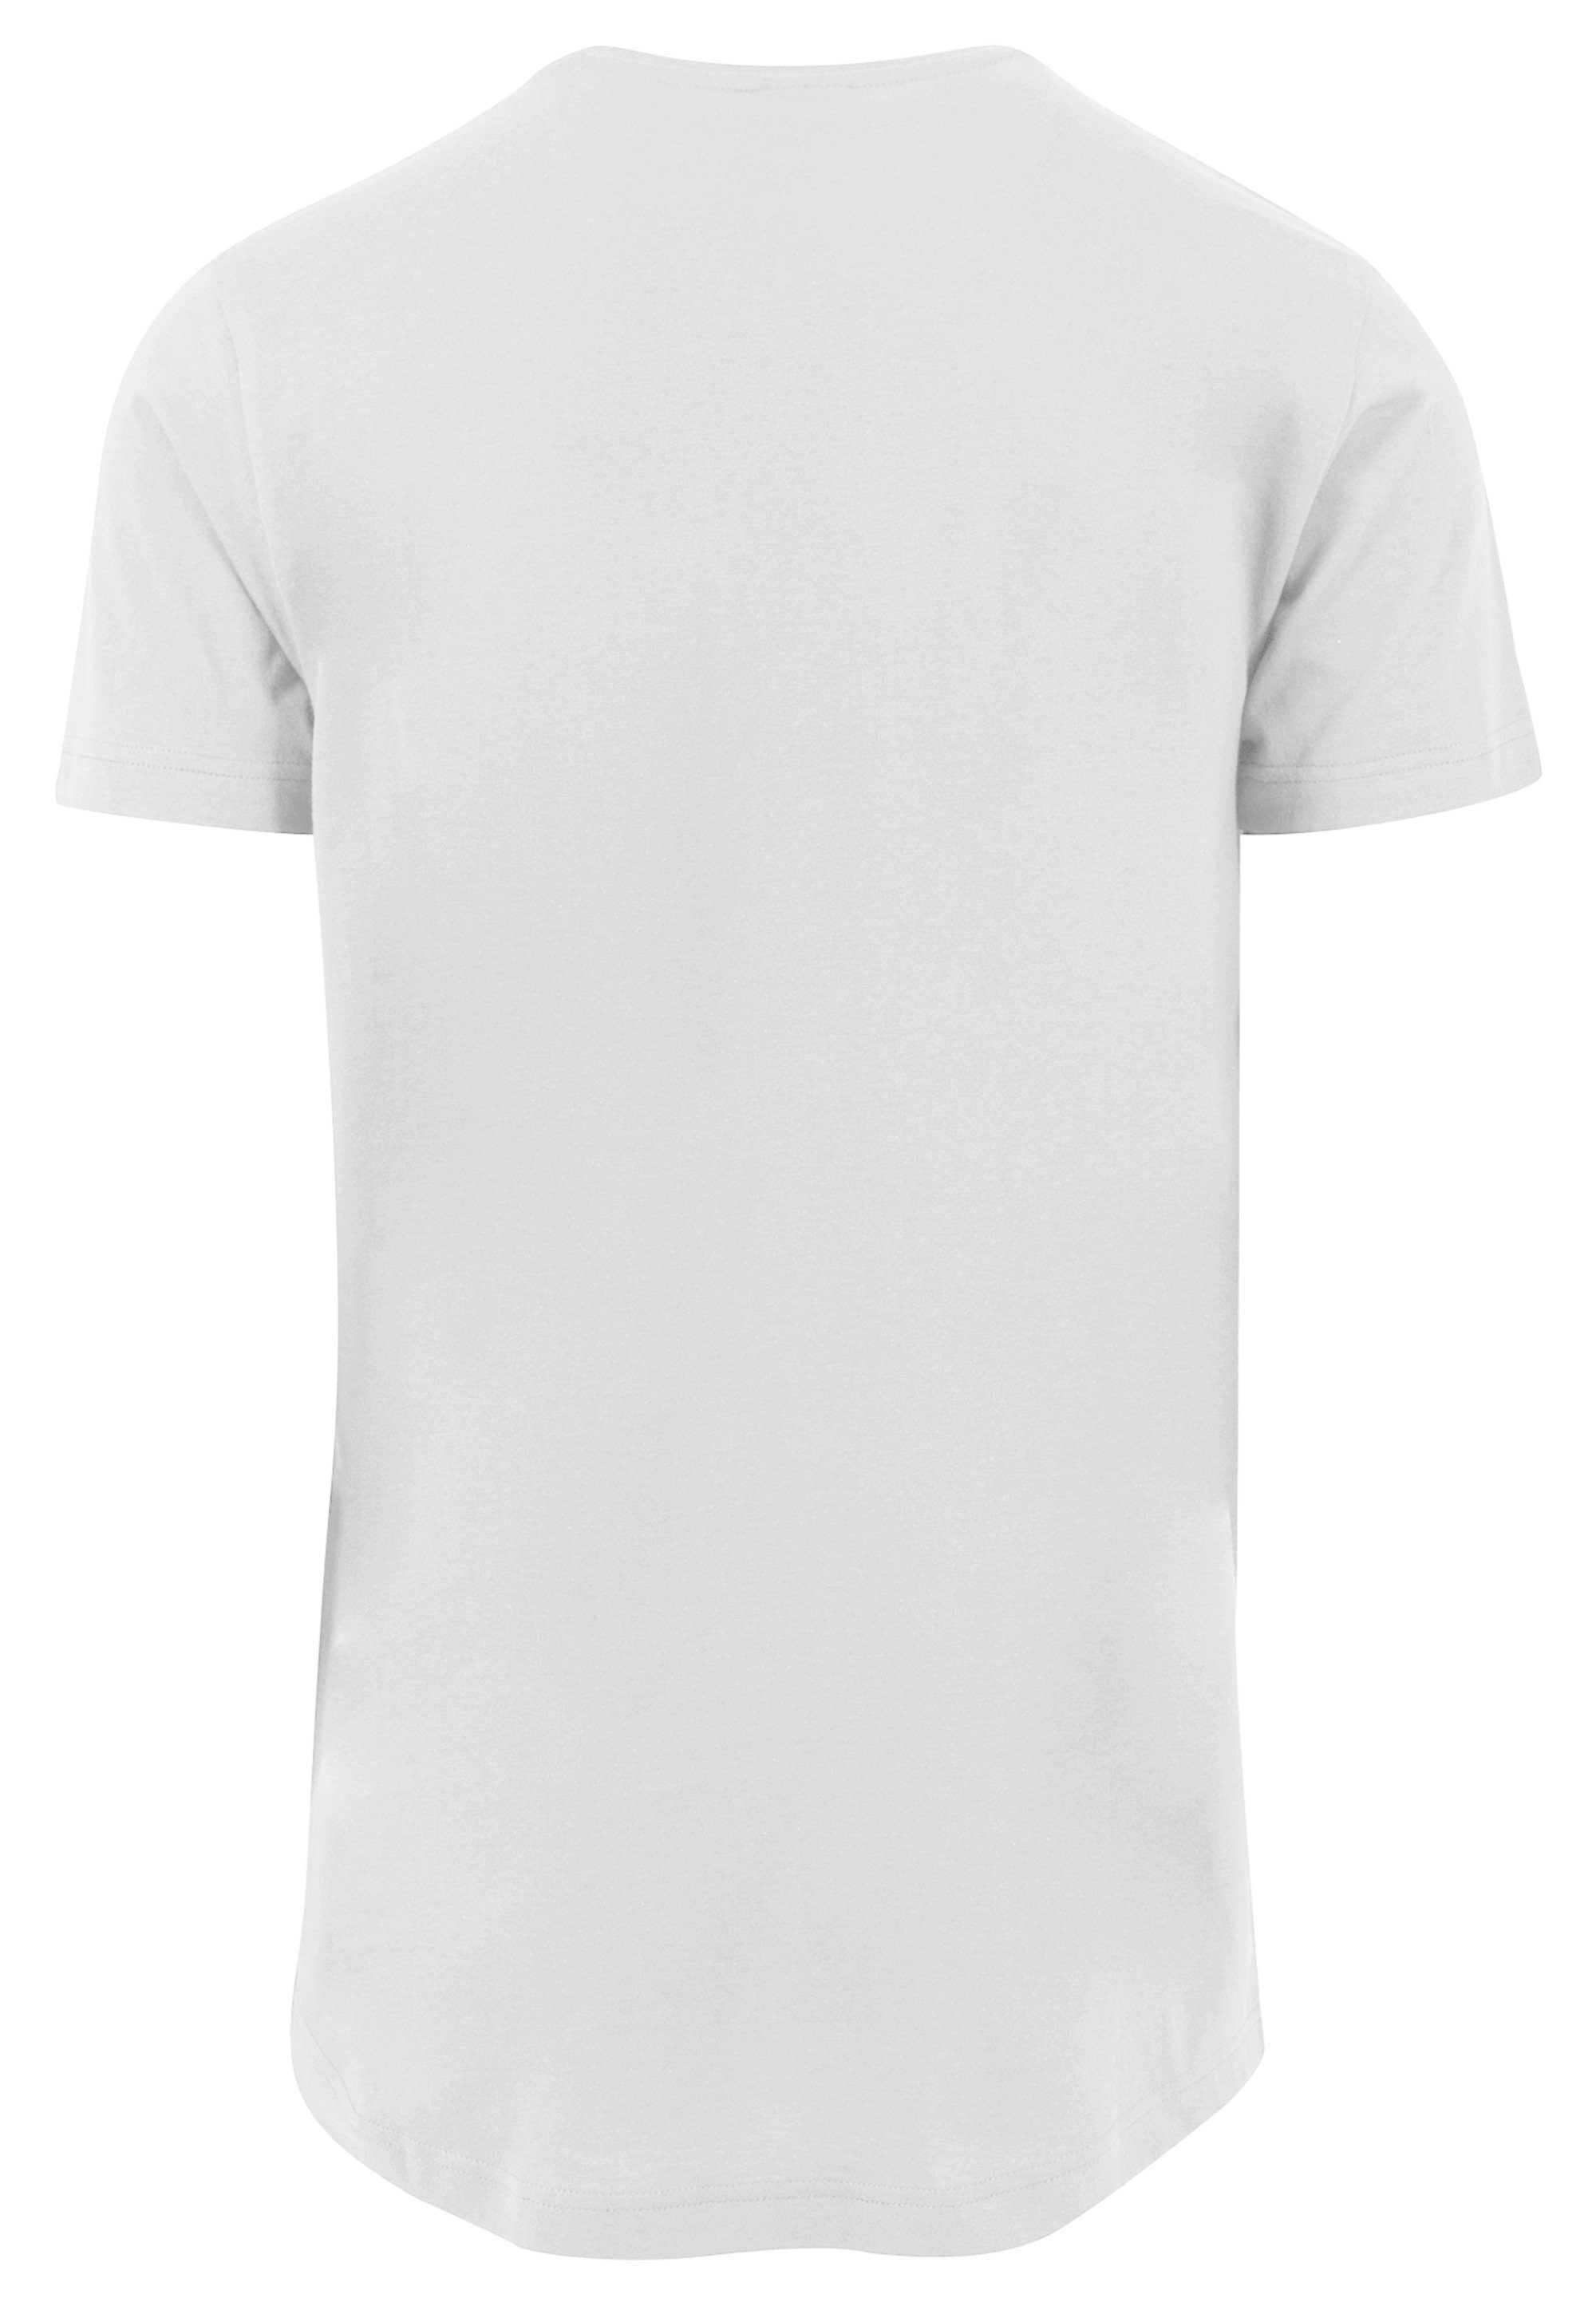 F4NT4STIC Merch,Lang,Longshirt,Bedruckt Classic T-Shirt White Herren,Premium NASA Shuttle Space